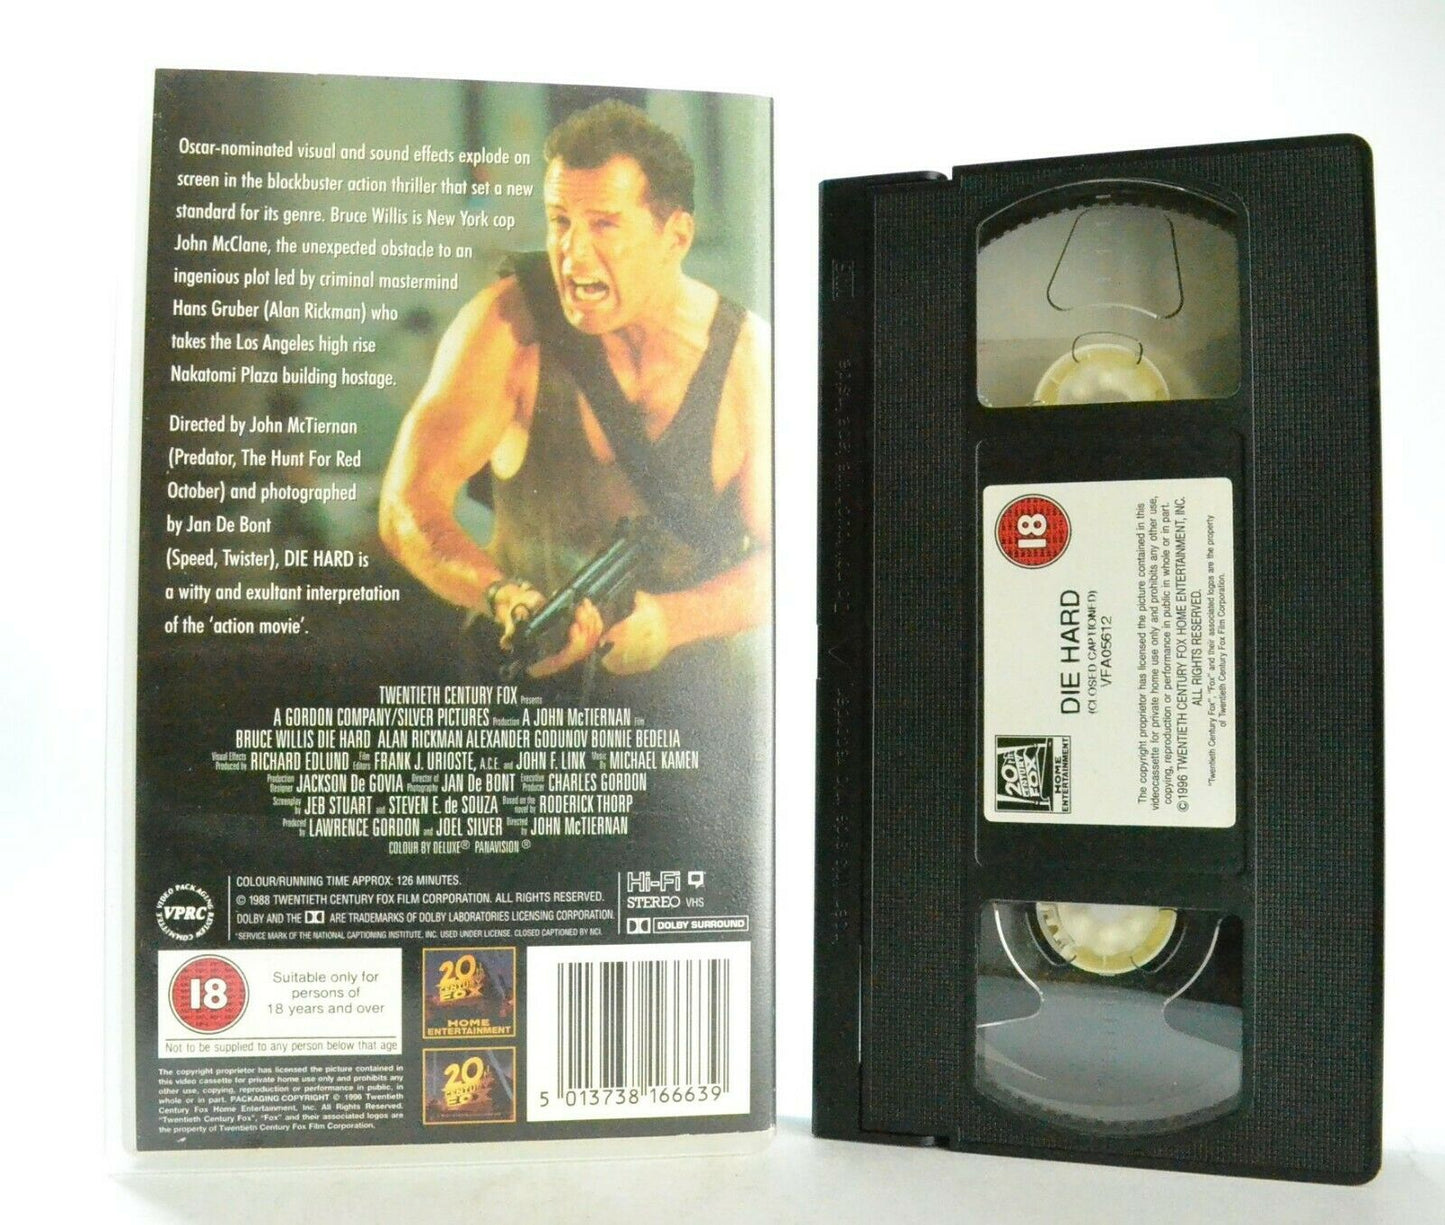 Die Hard (1988): Action - Bruce Willis/Alan Rickman - "Greatest Christmas" - VHS - Golden Class Movies LTD